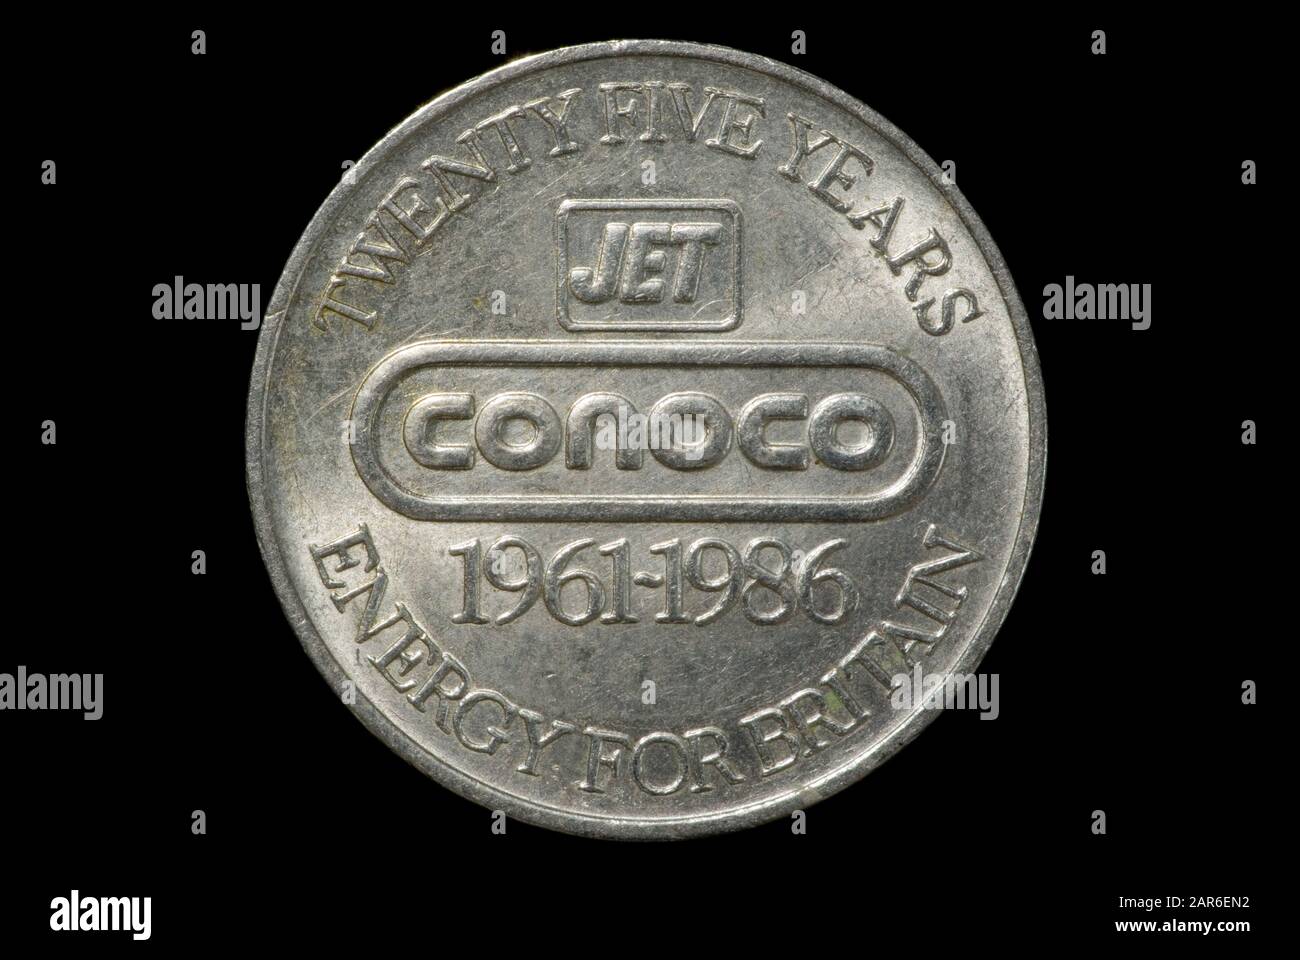 1986 CONOCO JET Silver Jubilee Token Stockfoto